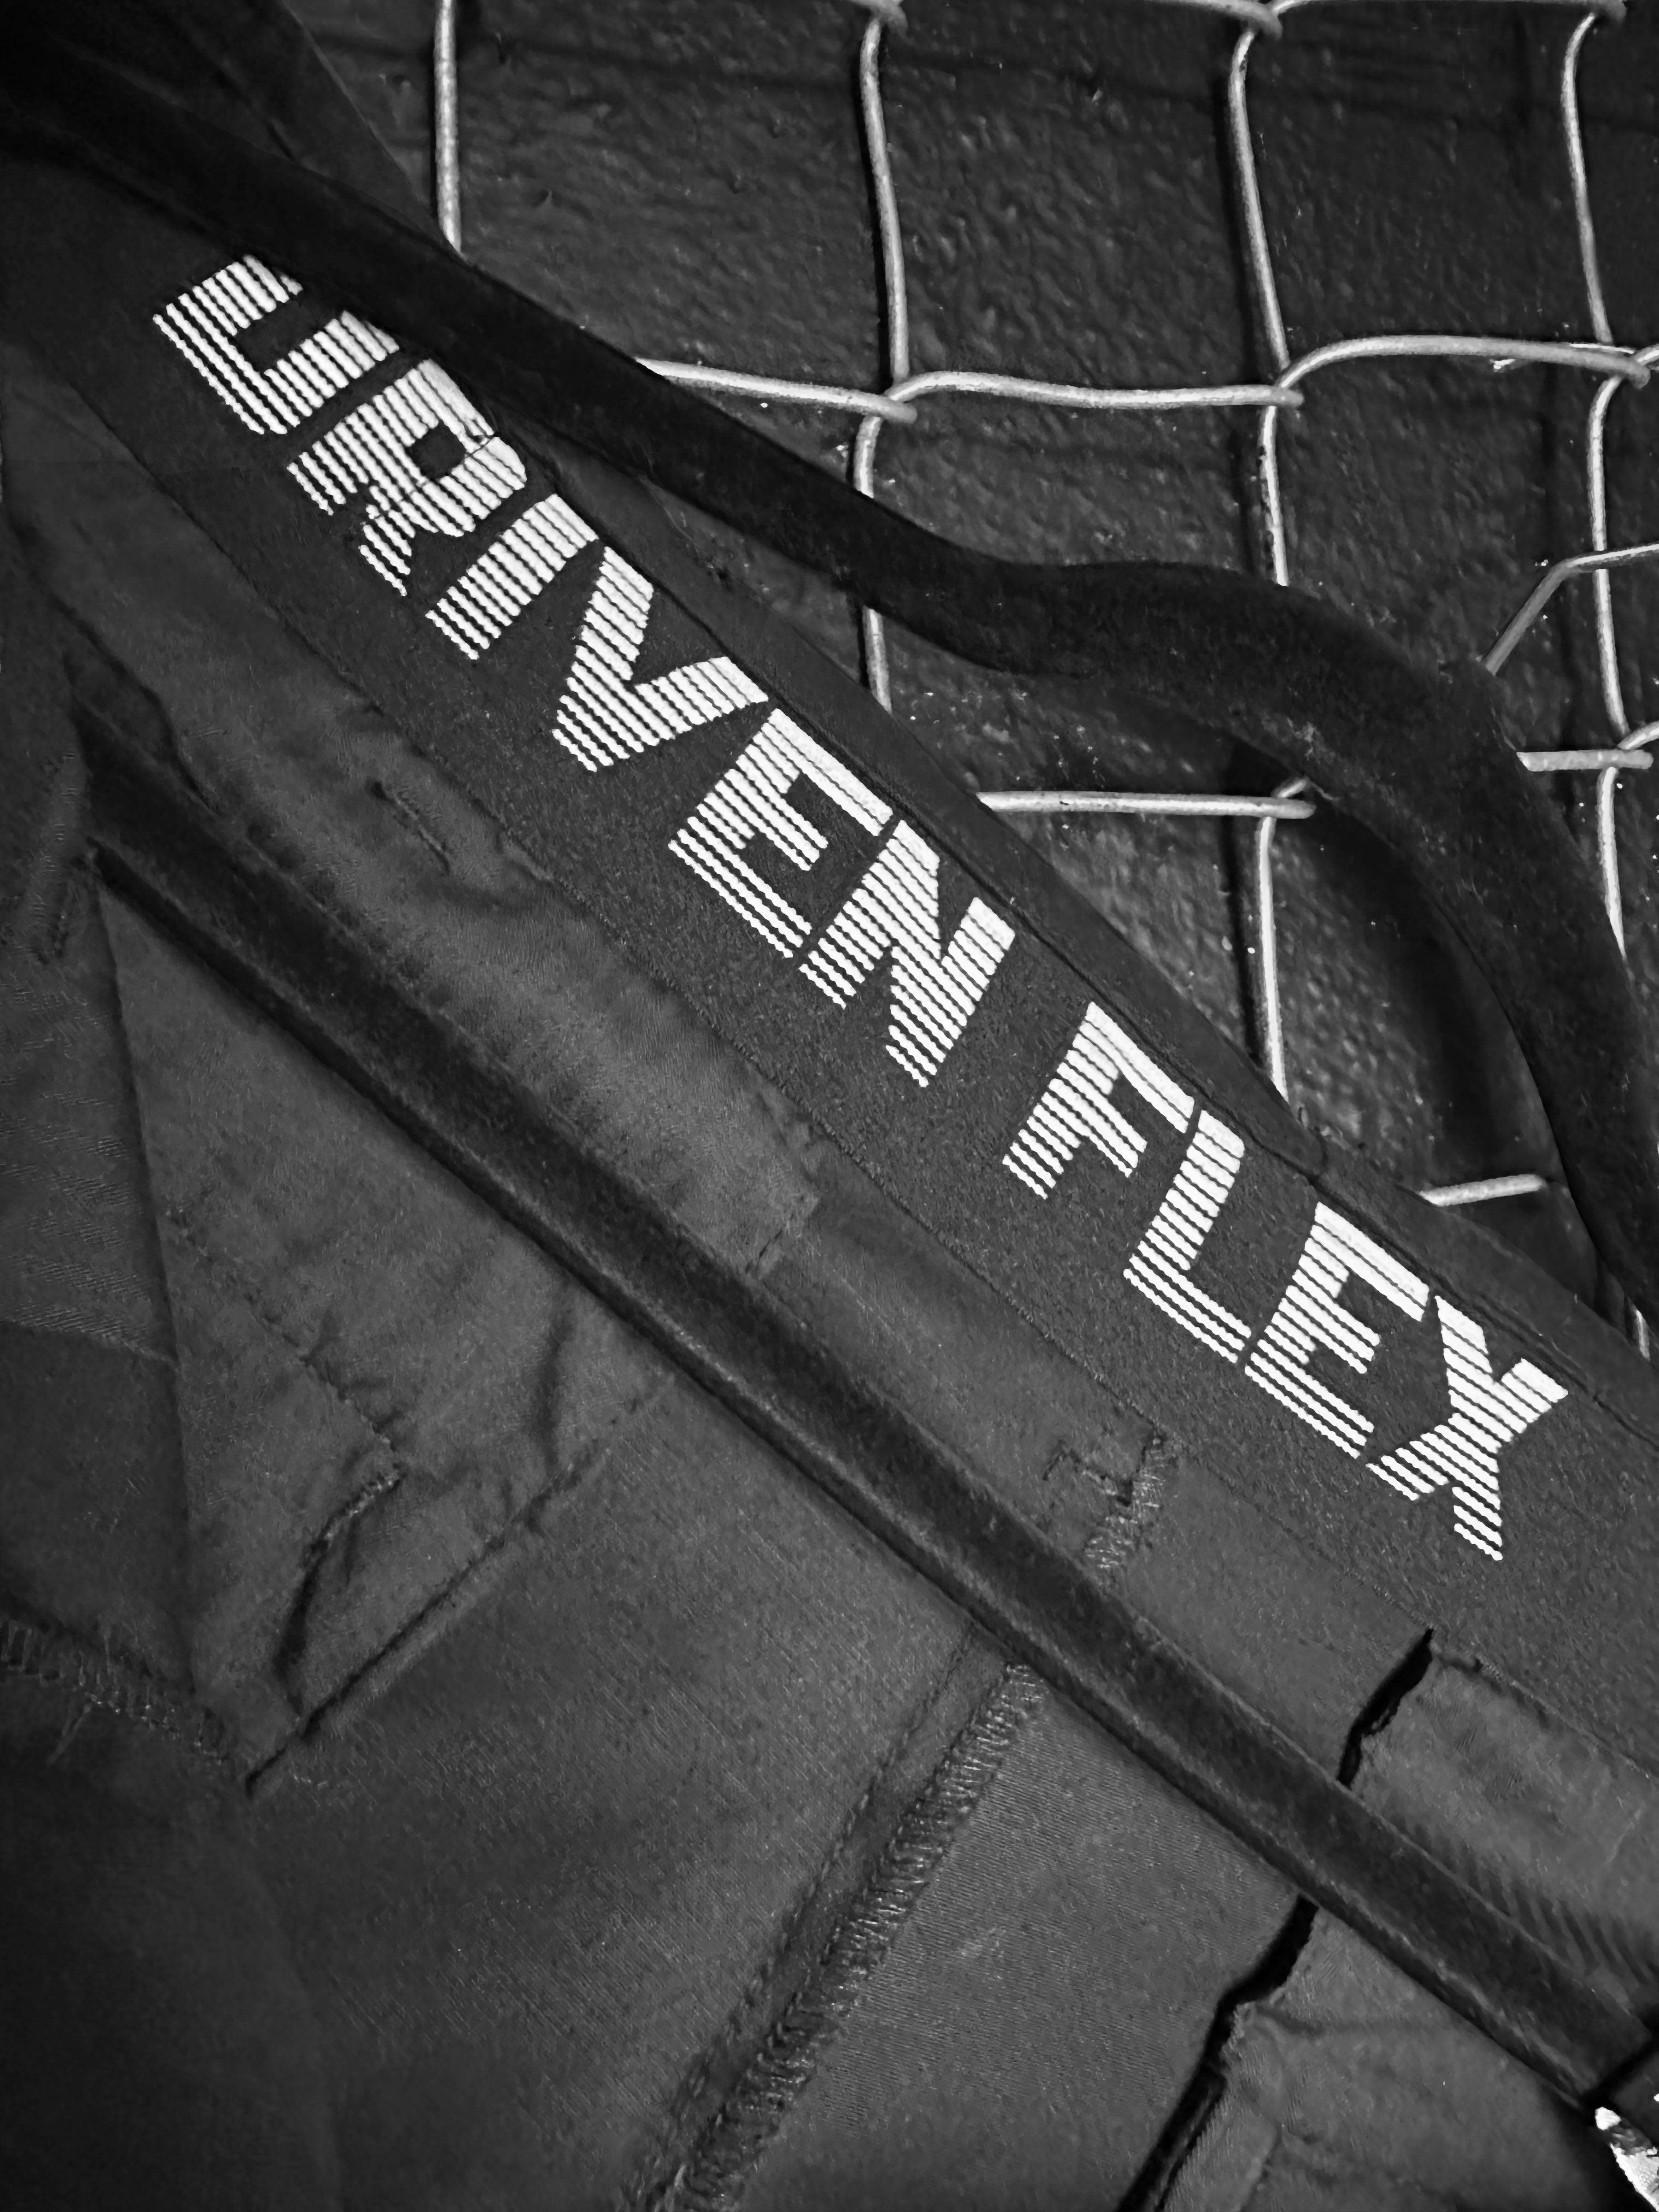 DRIVEN FLEX BLACK PANTS - The Drive Clothing